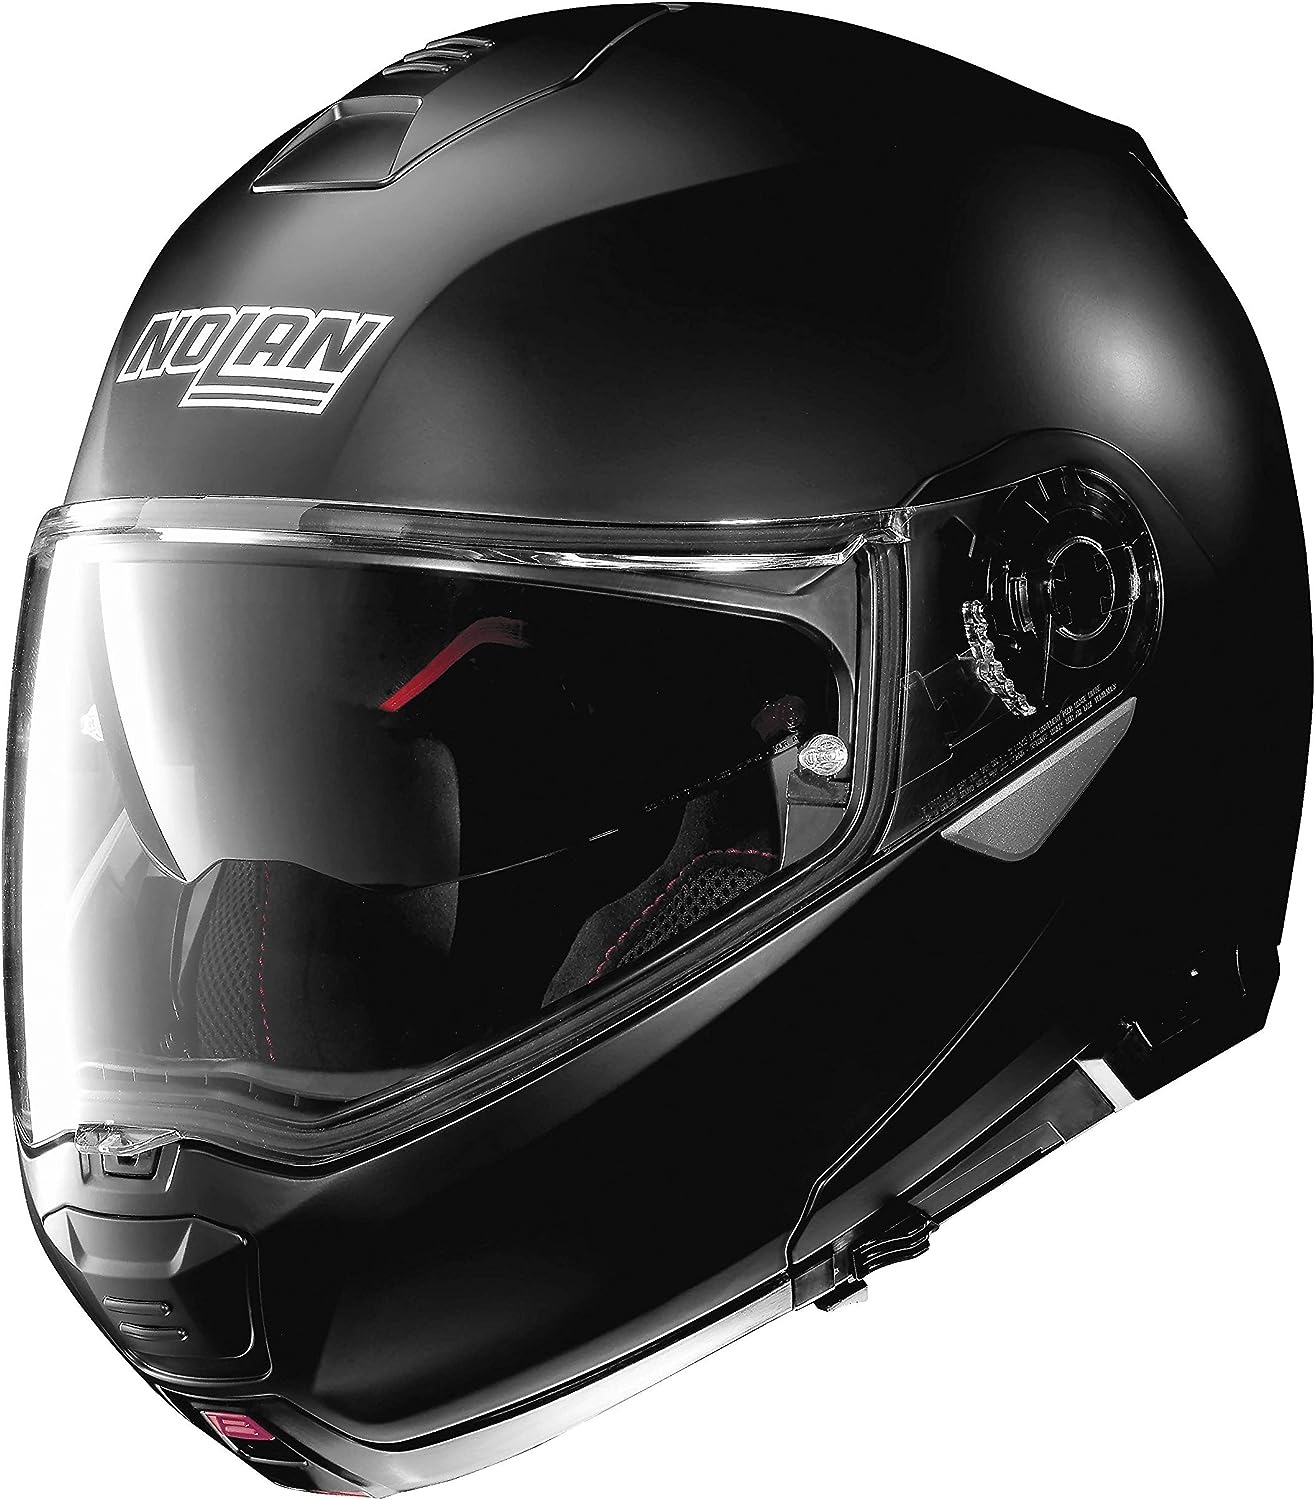 Best Smart Bluetooth Motorcycle Helmet